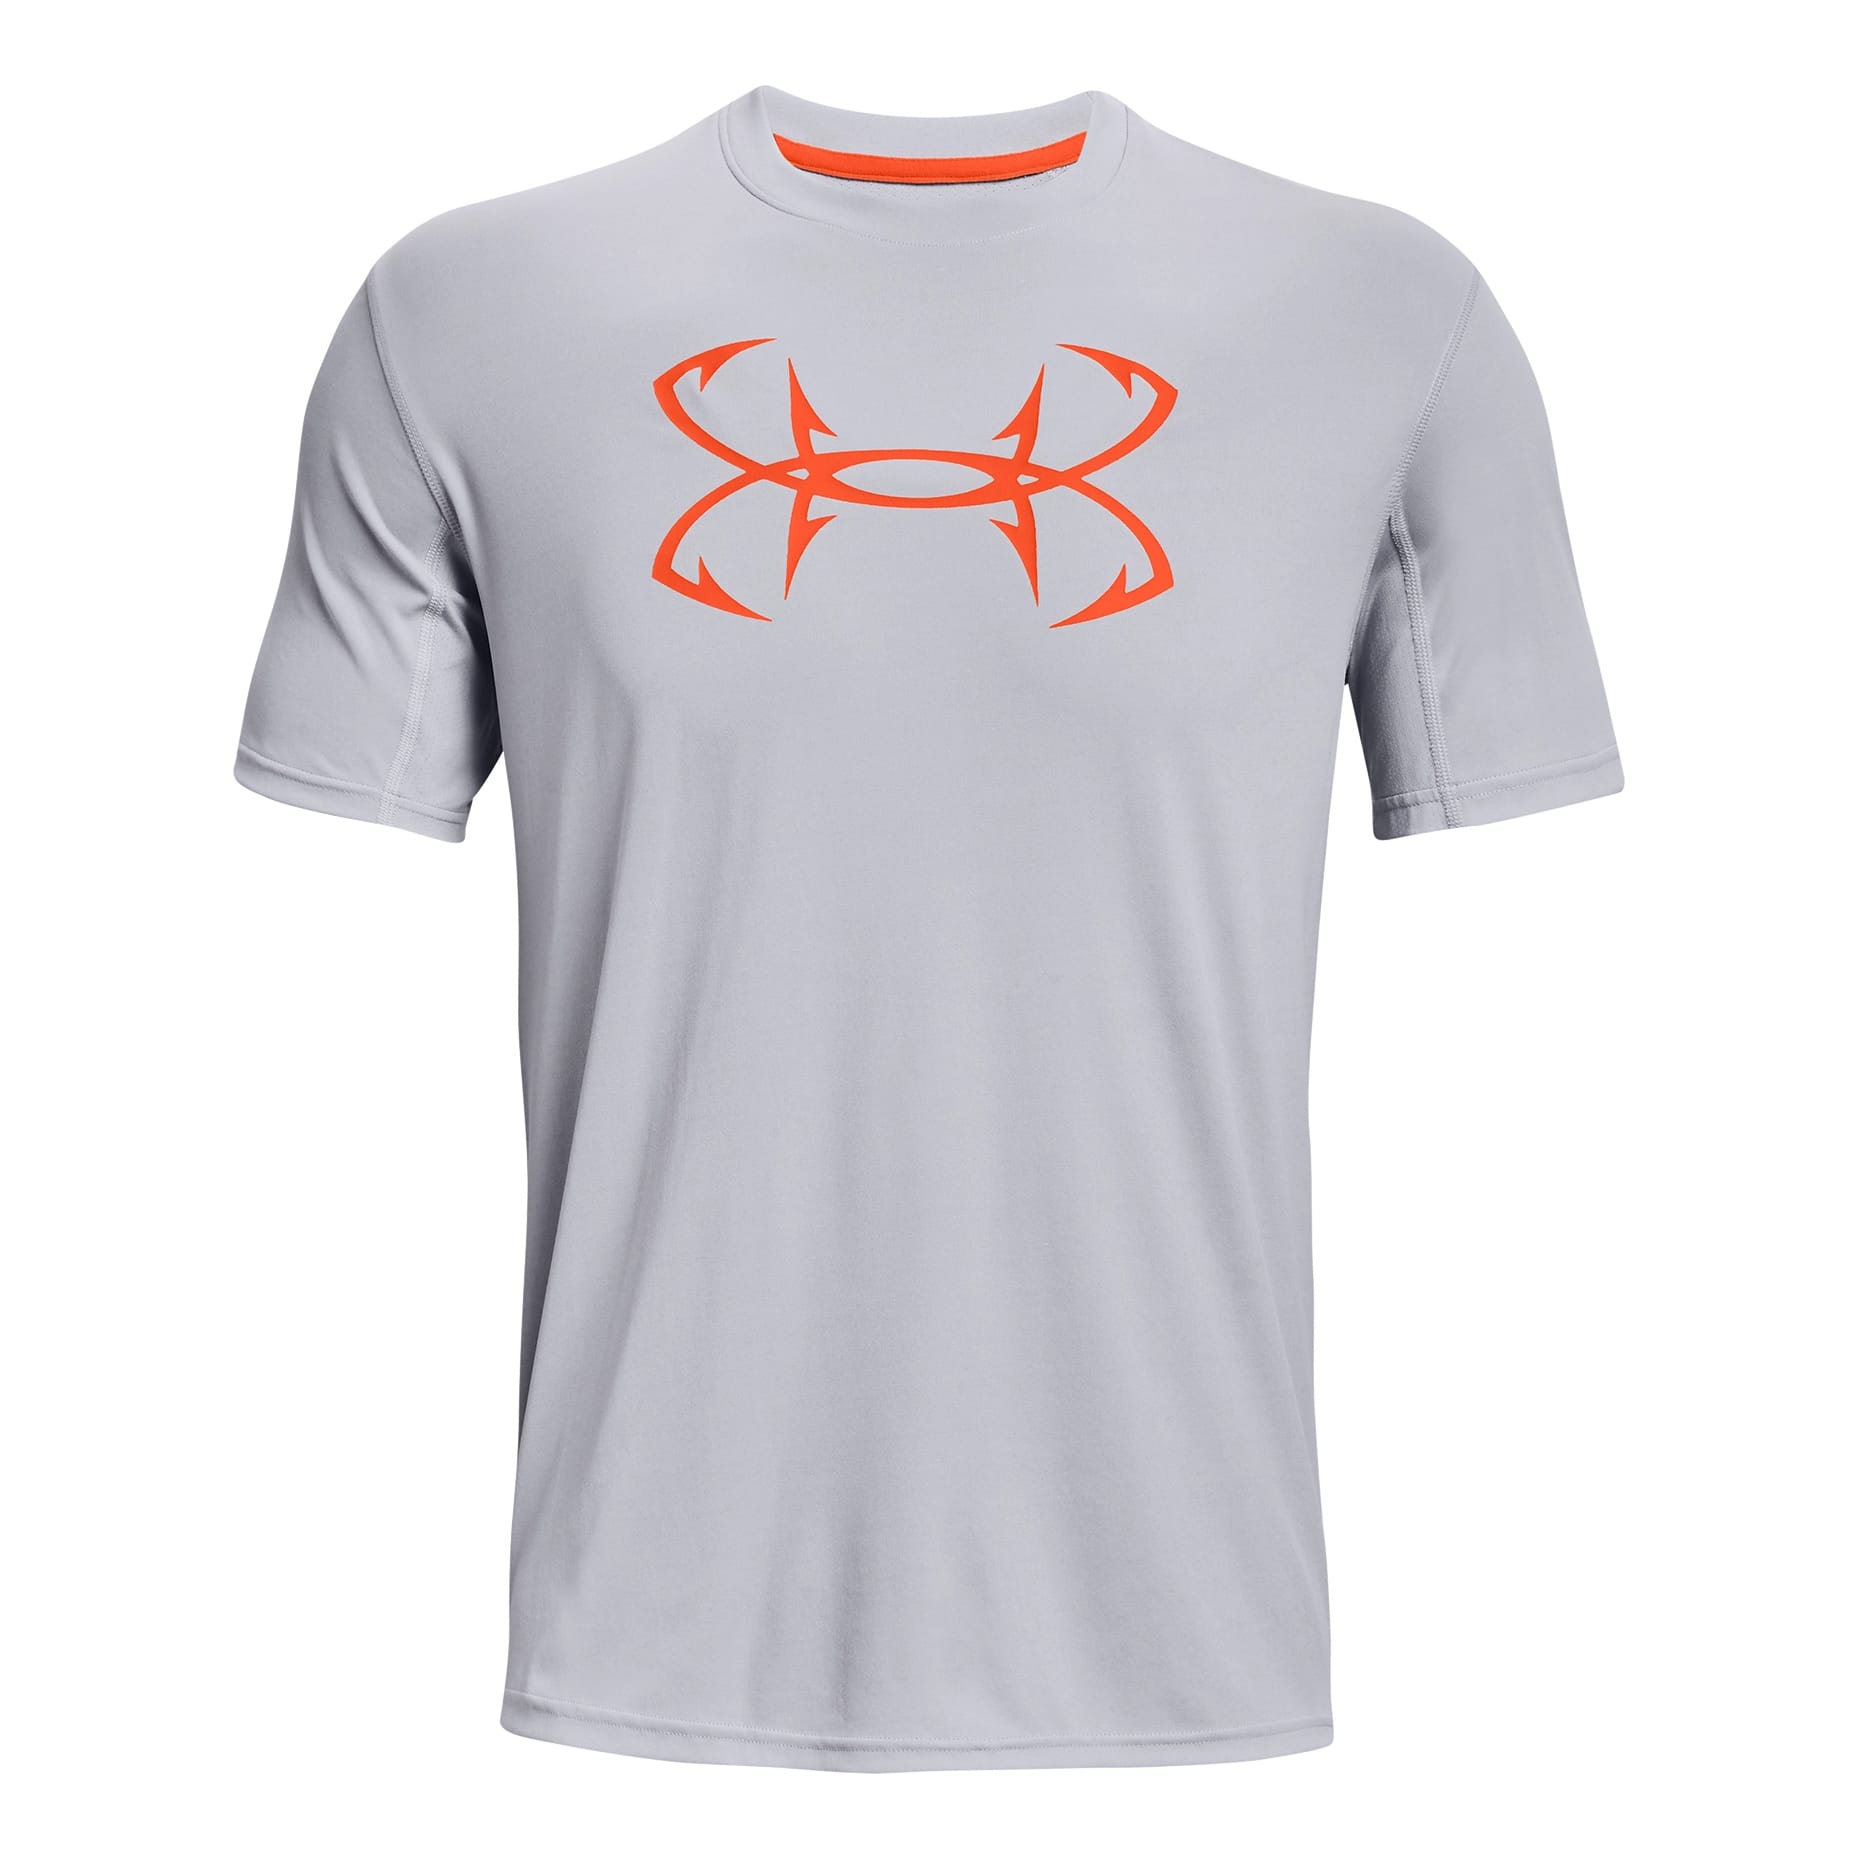 Under Armour® Men’s Iso-Chill Fish Short Sleeve T-Shirt - Mod Grey/Blaze Orange